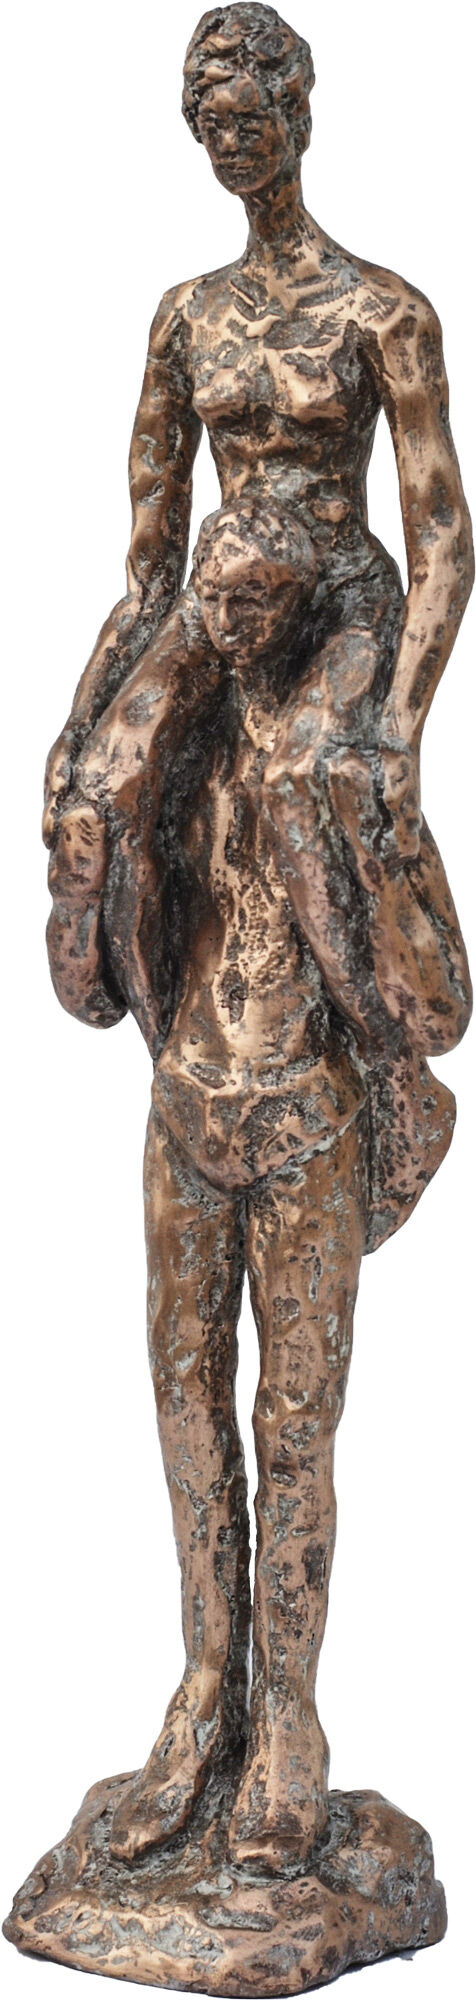 Sculpture "Piggyback" (2017), bronze by Dagmar Vogt